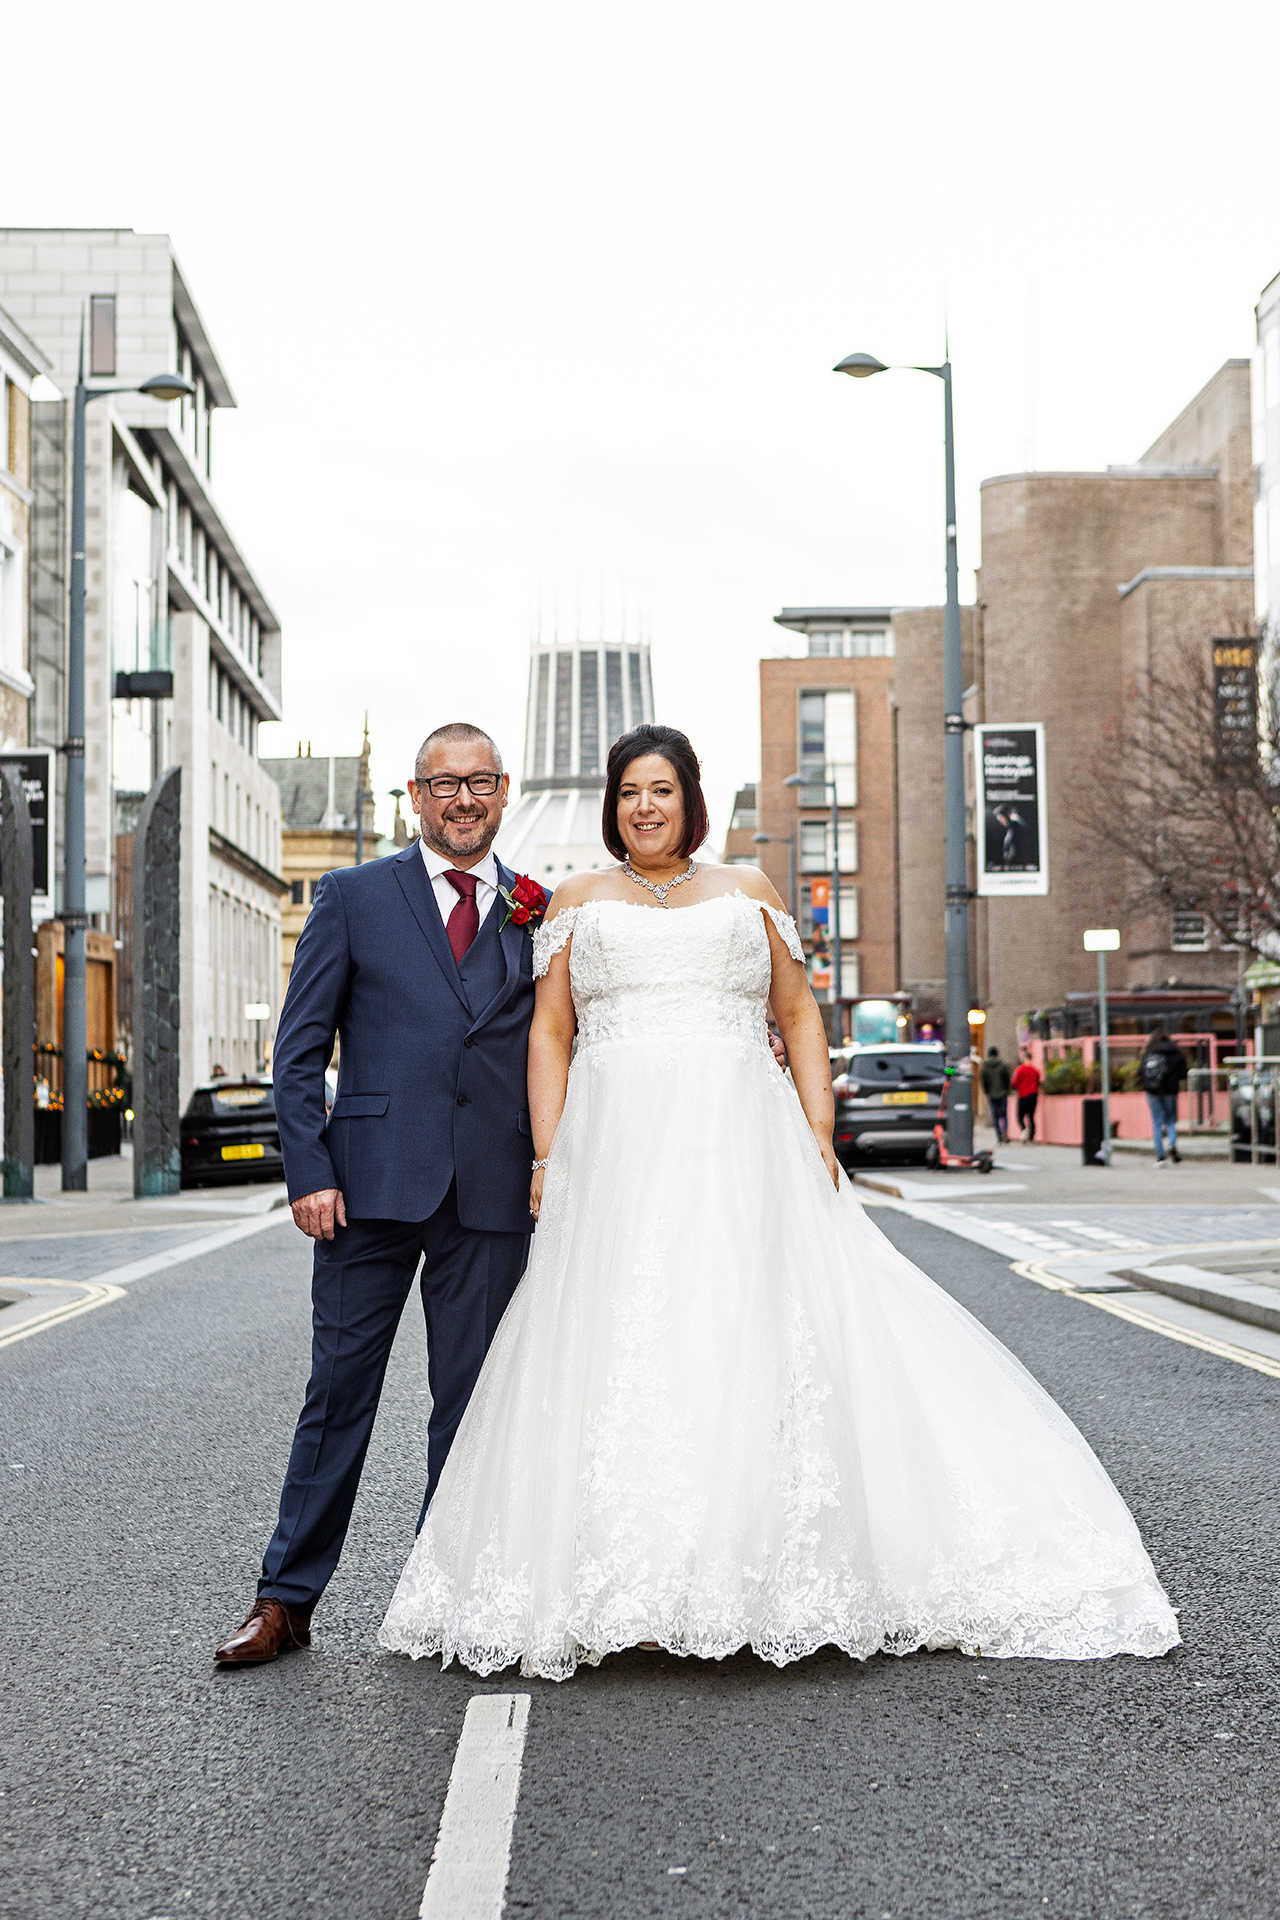 Wedding photographers liverpool and Merseyside 